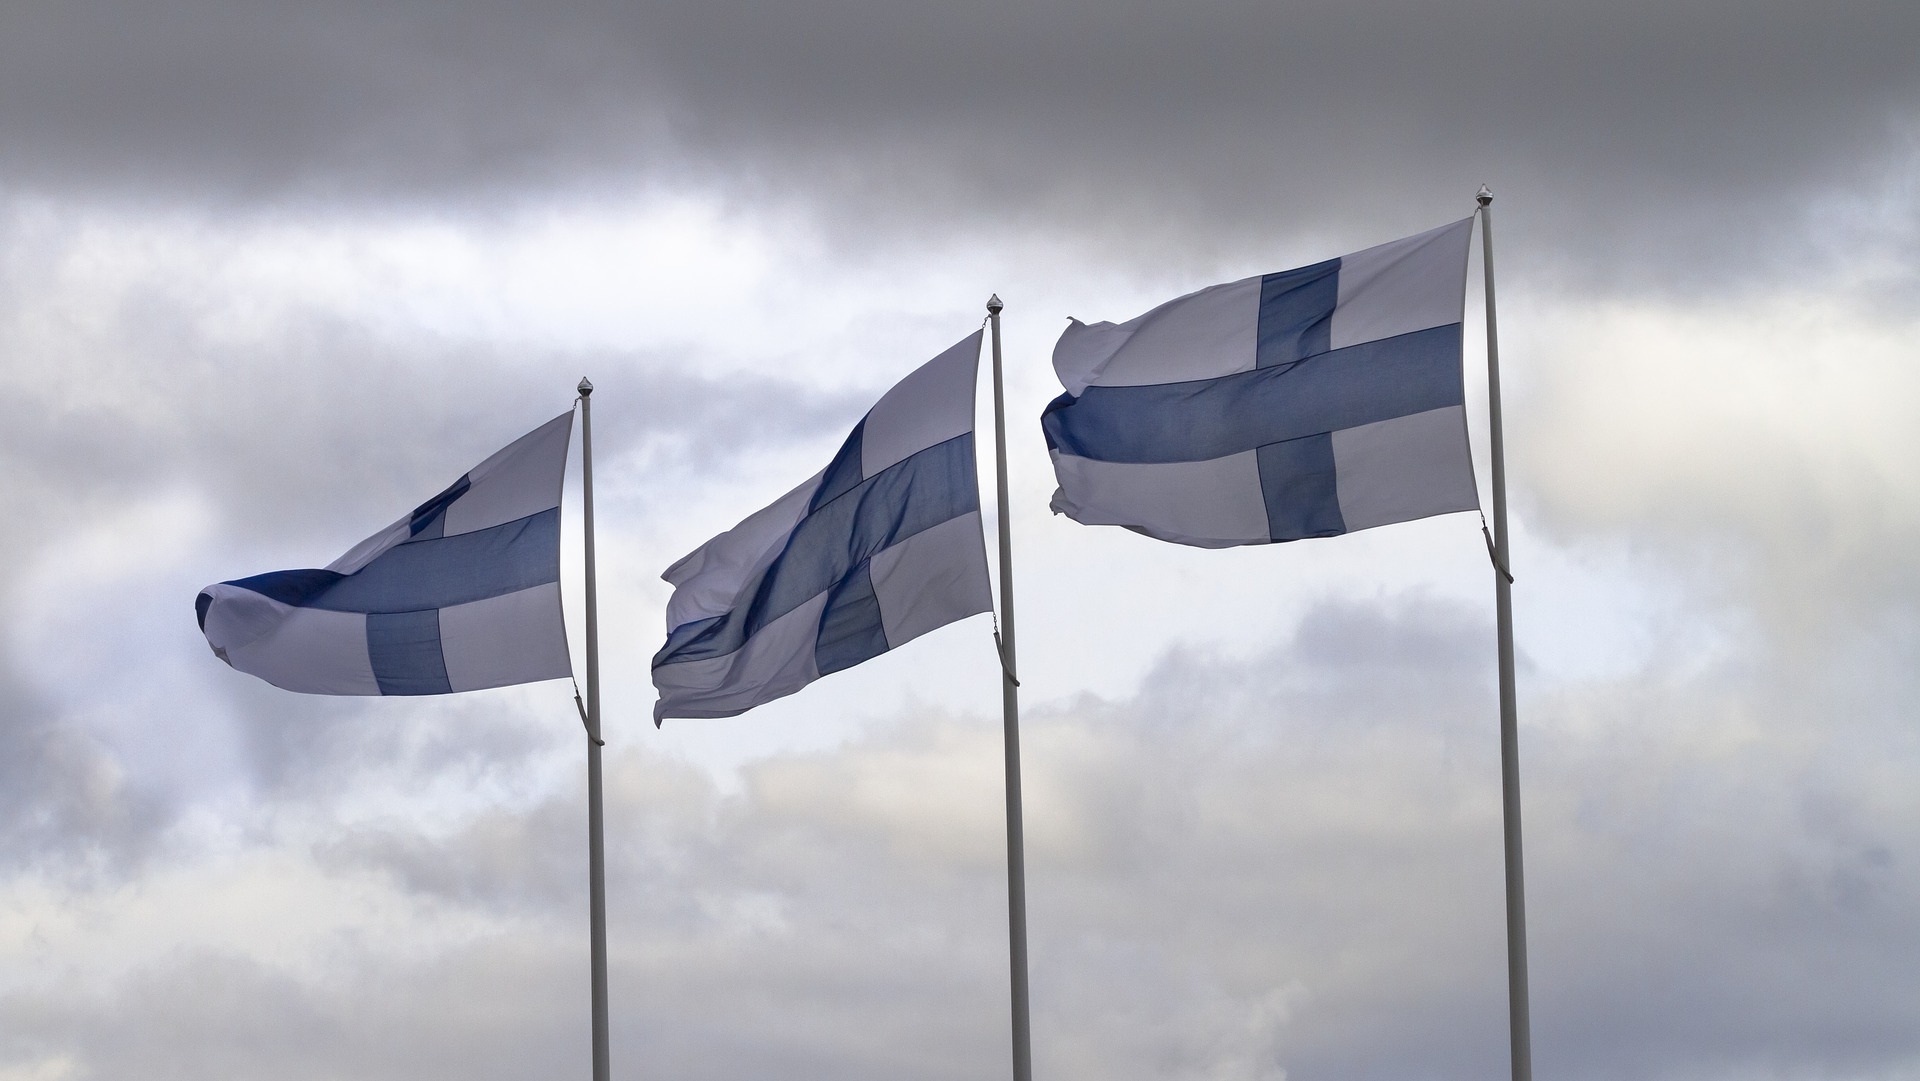 kolme suomen lippua liehuu lipputangoissa